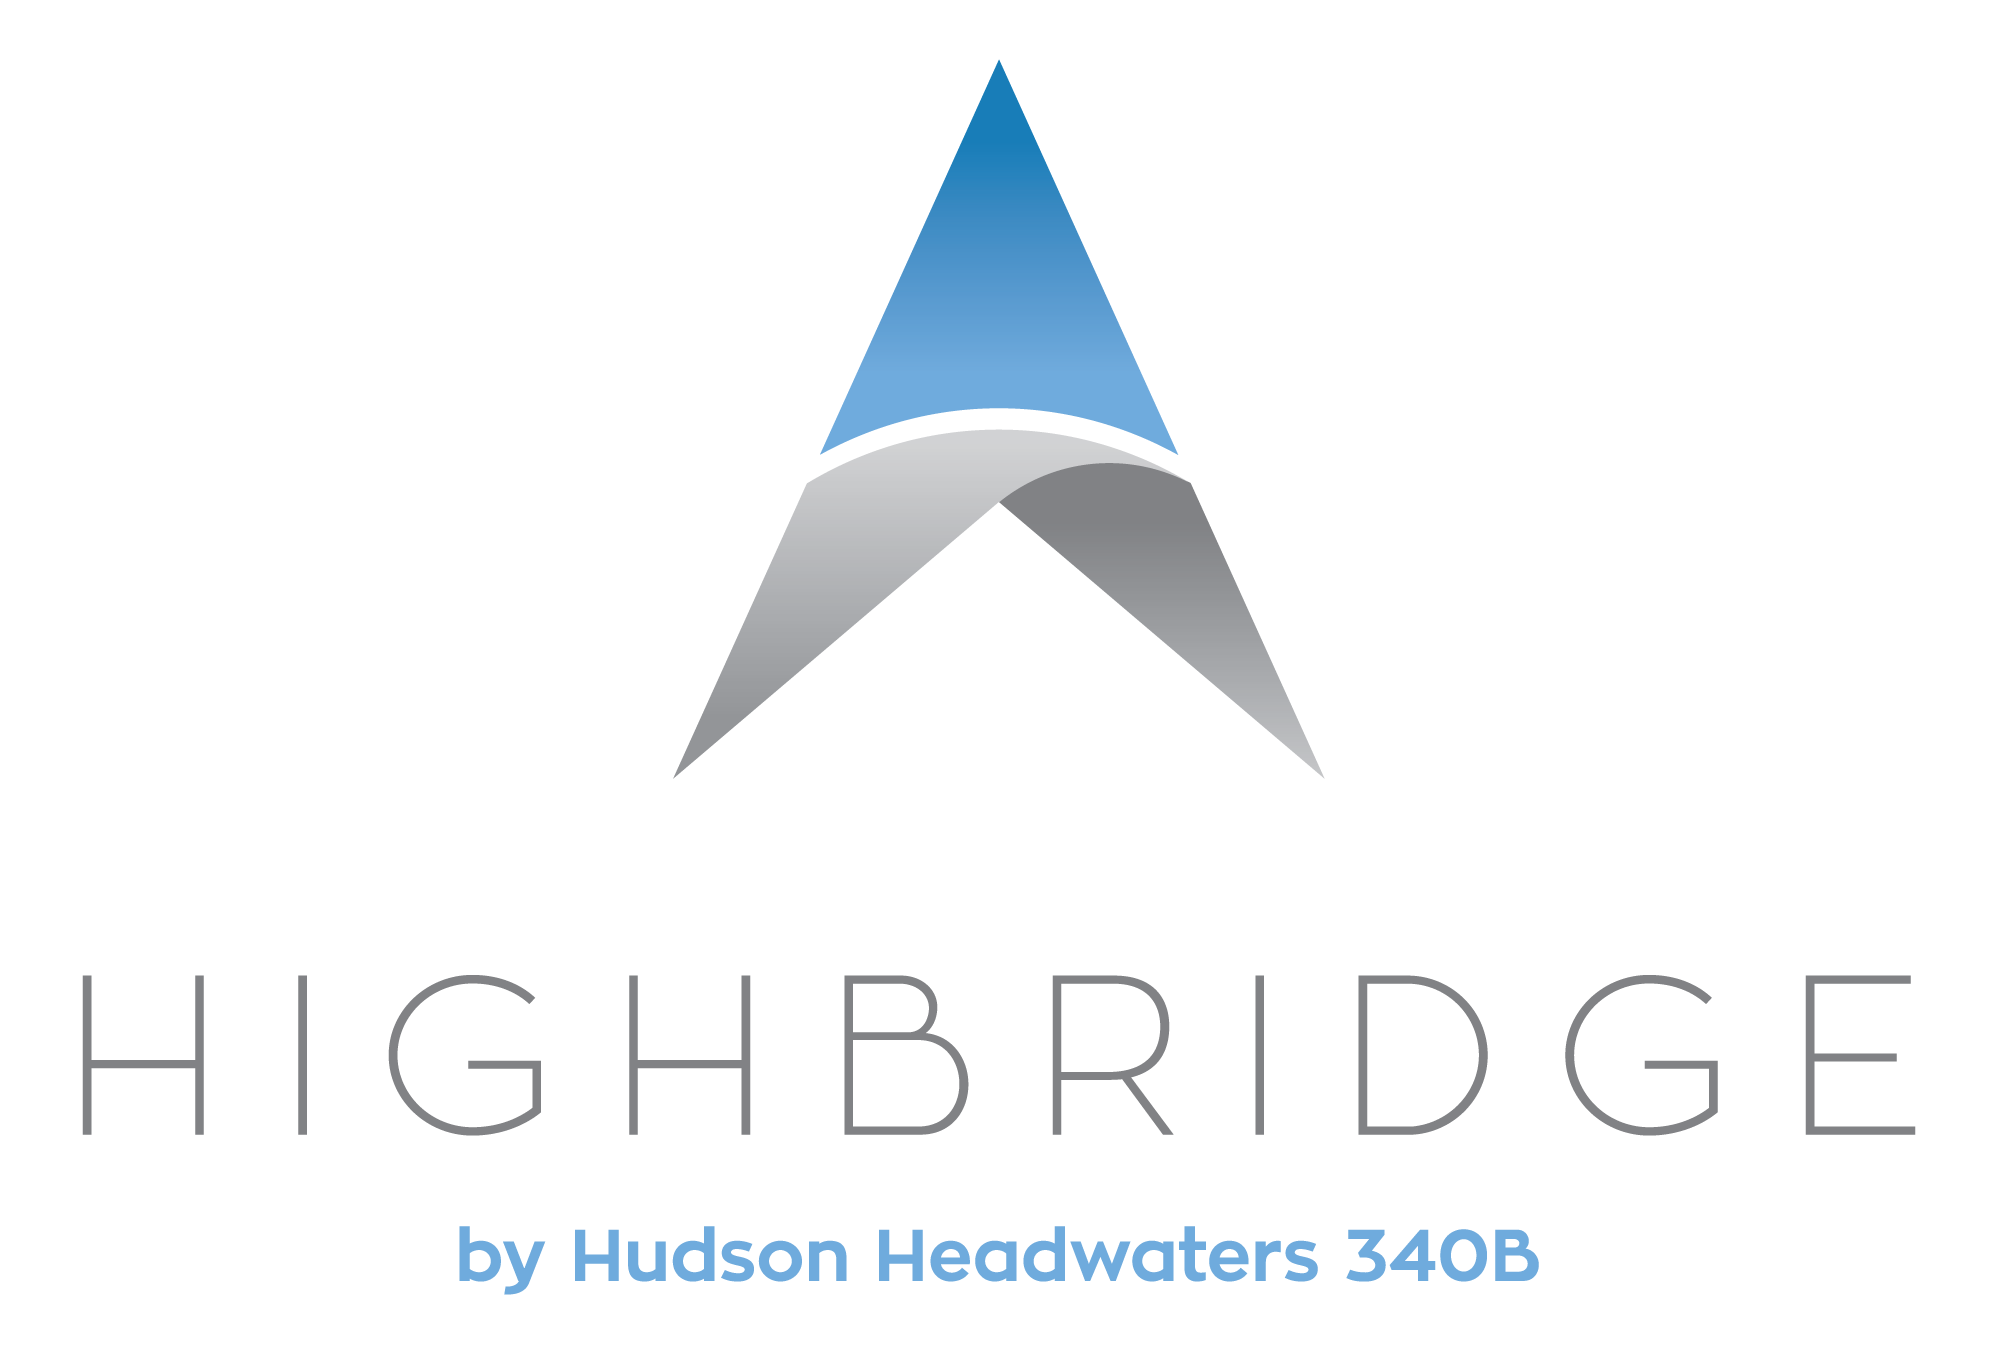 Highbridge by Hudson Headwaters 340B